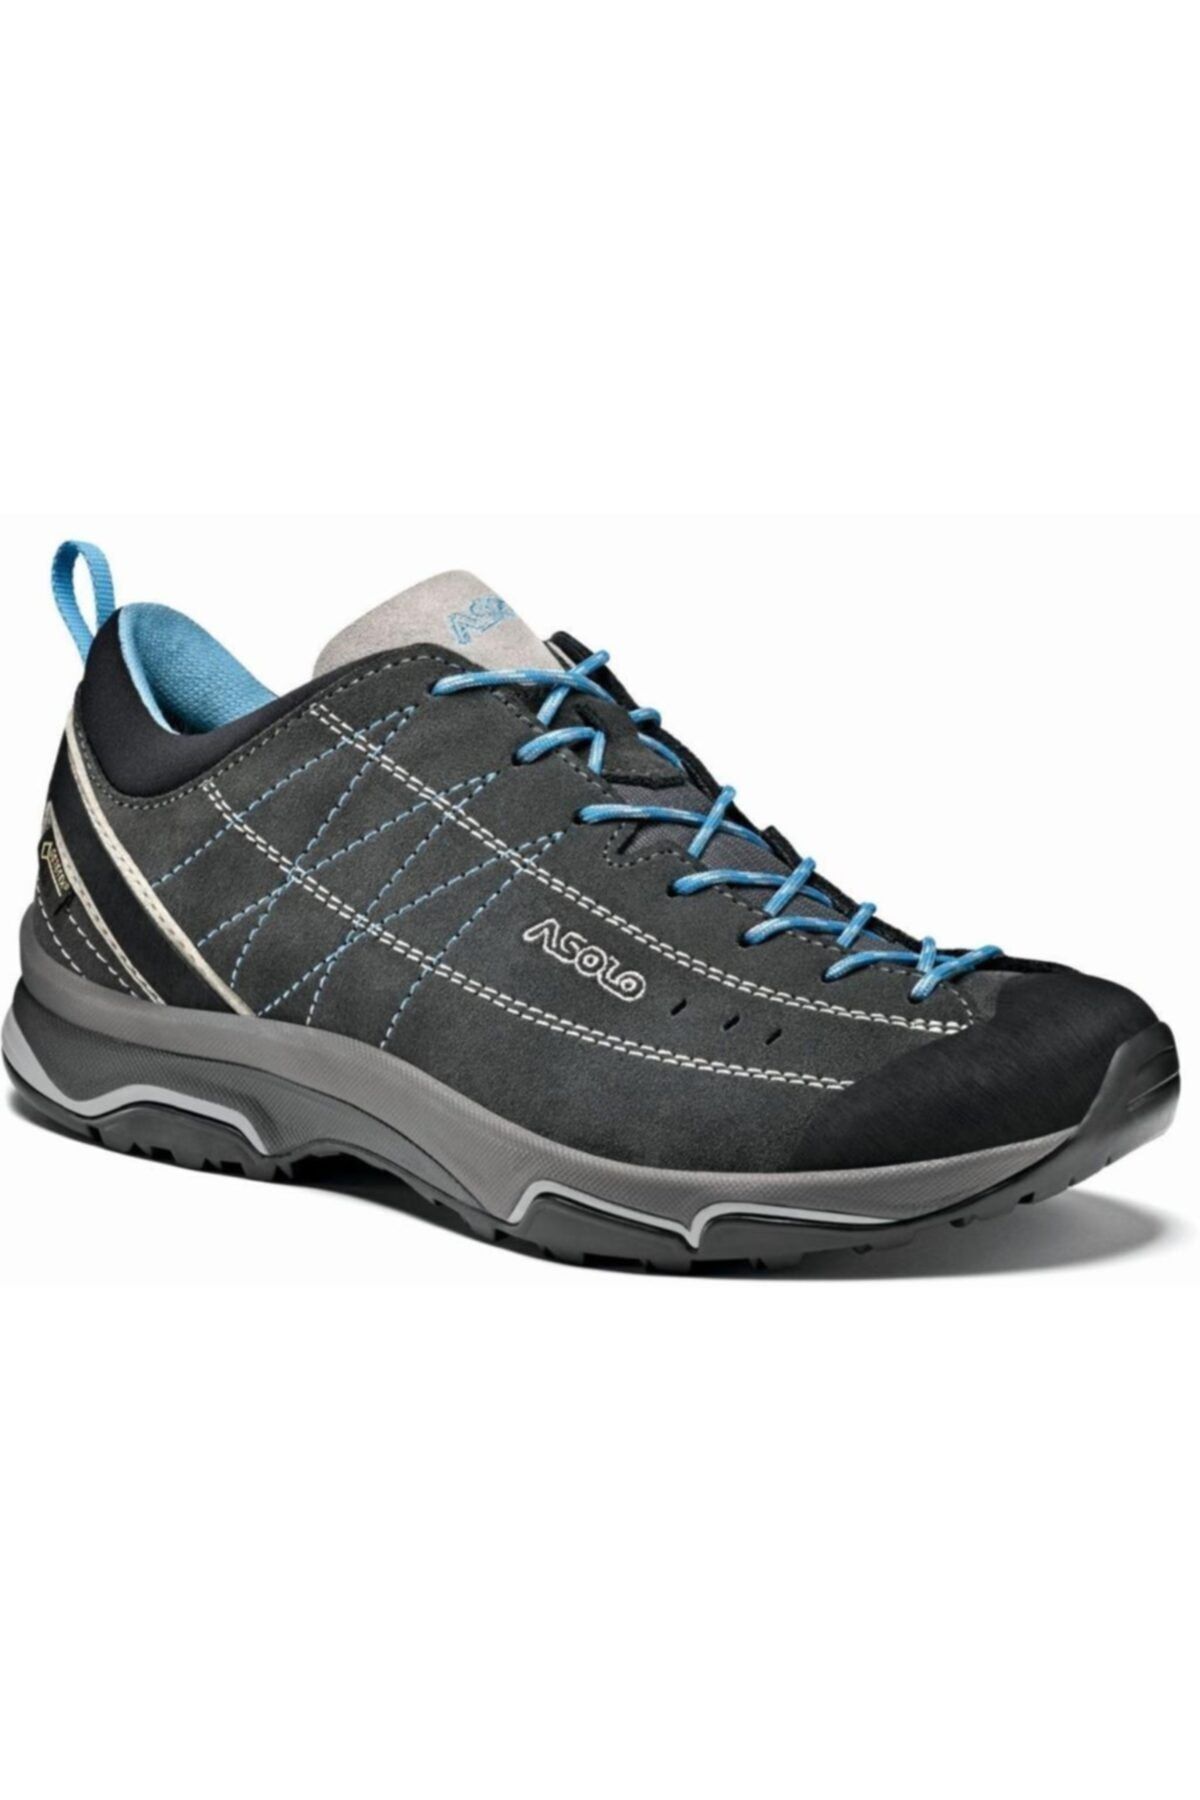 Asolo Nucleon Gv Ml A40013 00 A772 Graphite/silver/cyan Blue Kadın Outdoor Ayakkabı